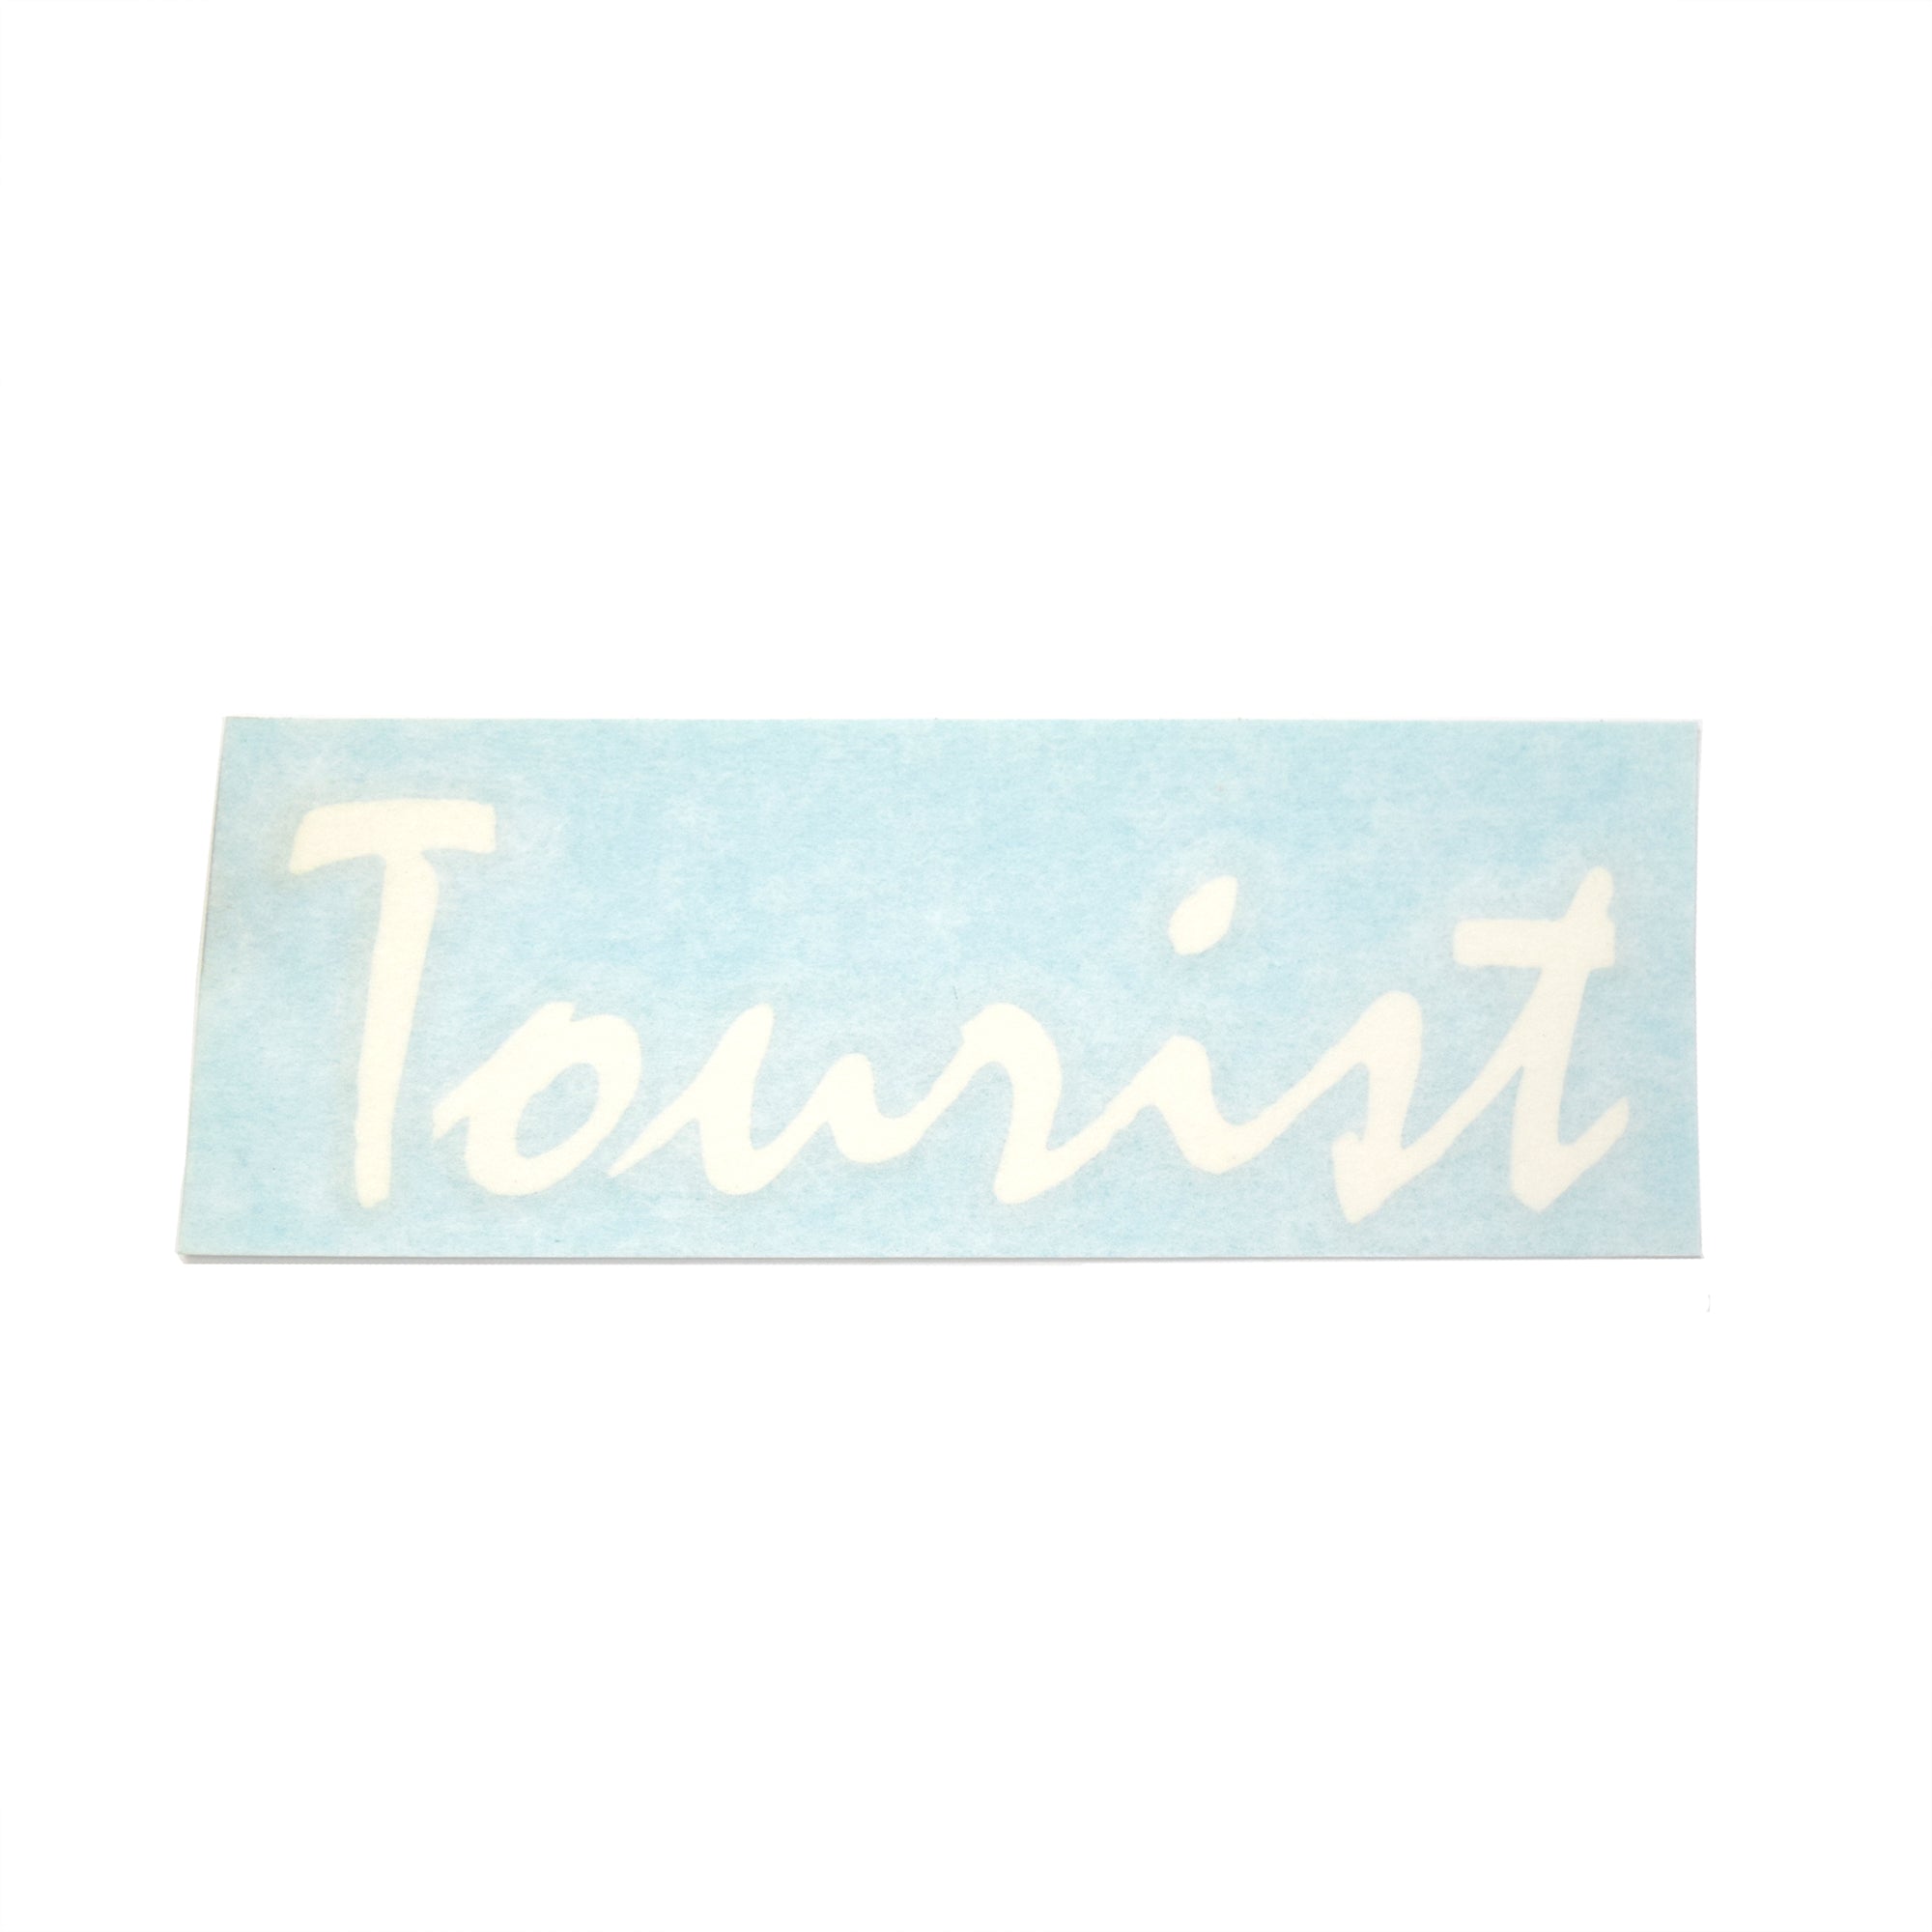 LAST CALL! Sticker/Decal TOURIST White